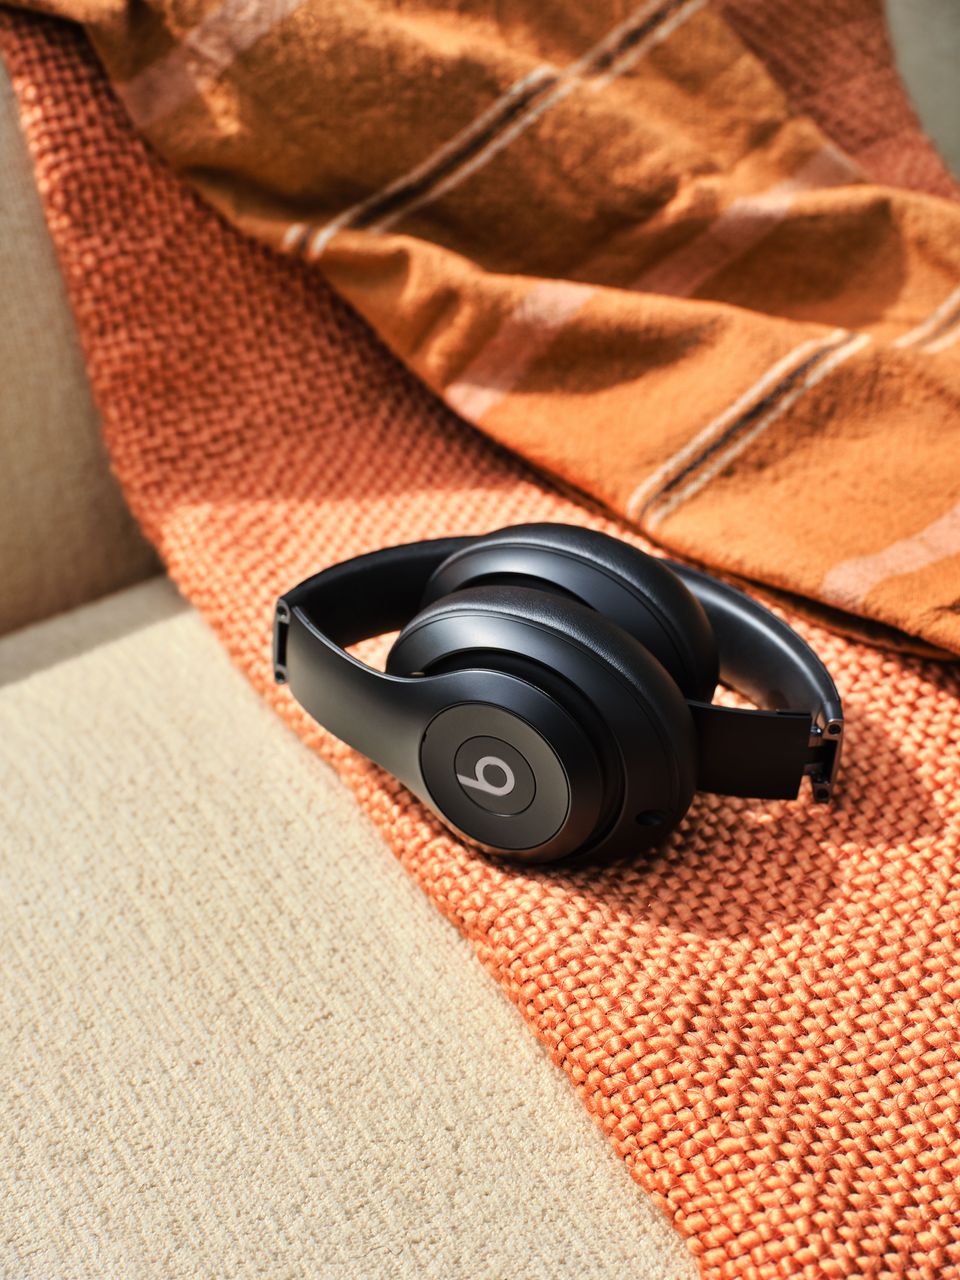 Beats Studio Pro Wireless Noise Cancelling Over-Ear Headphones - Black